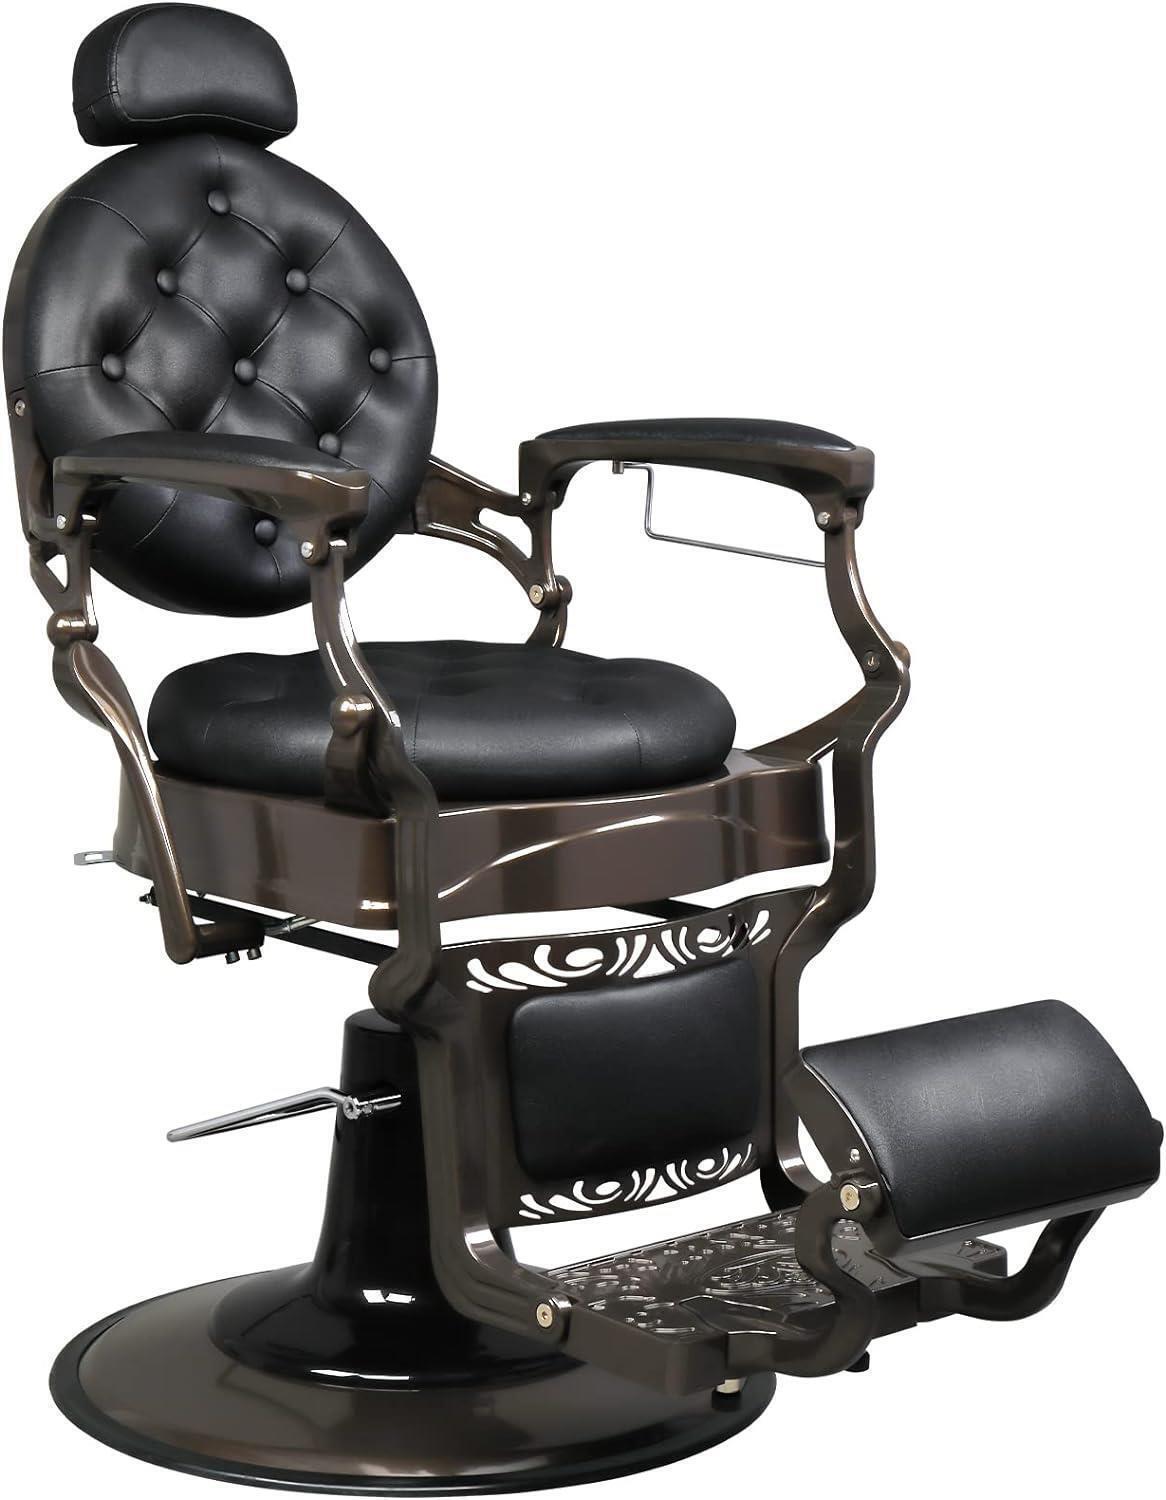 thinkstar Heavy Duty Barber Chair Vintage Salon Chair Hydraulic Recline Beauty Spa Styling